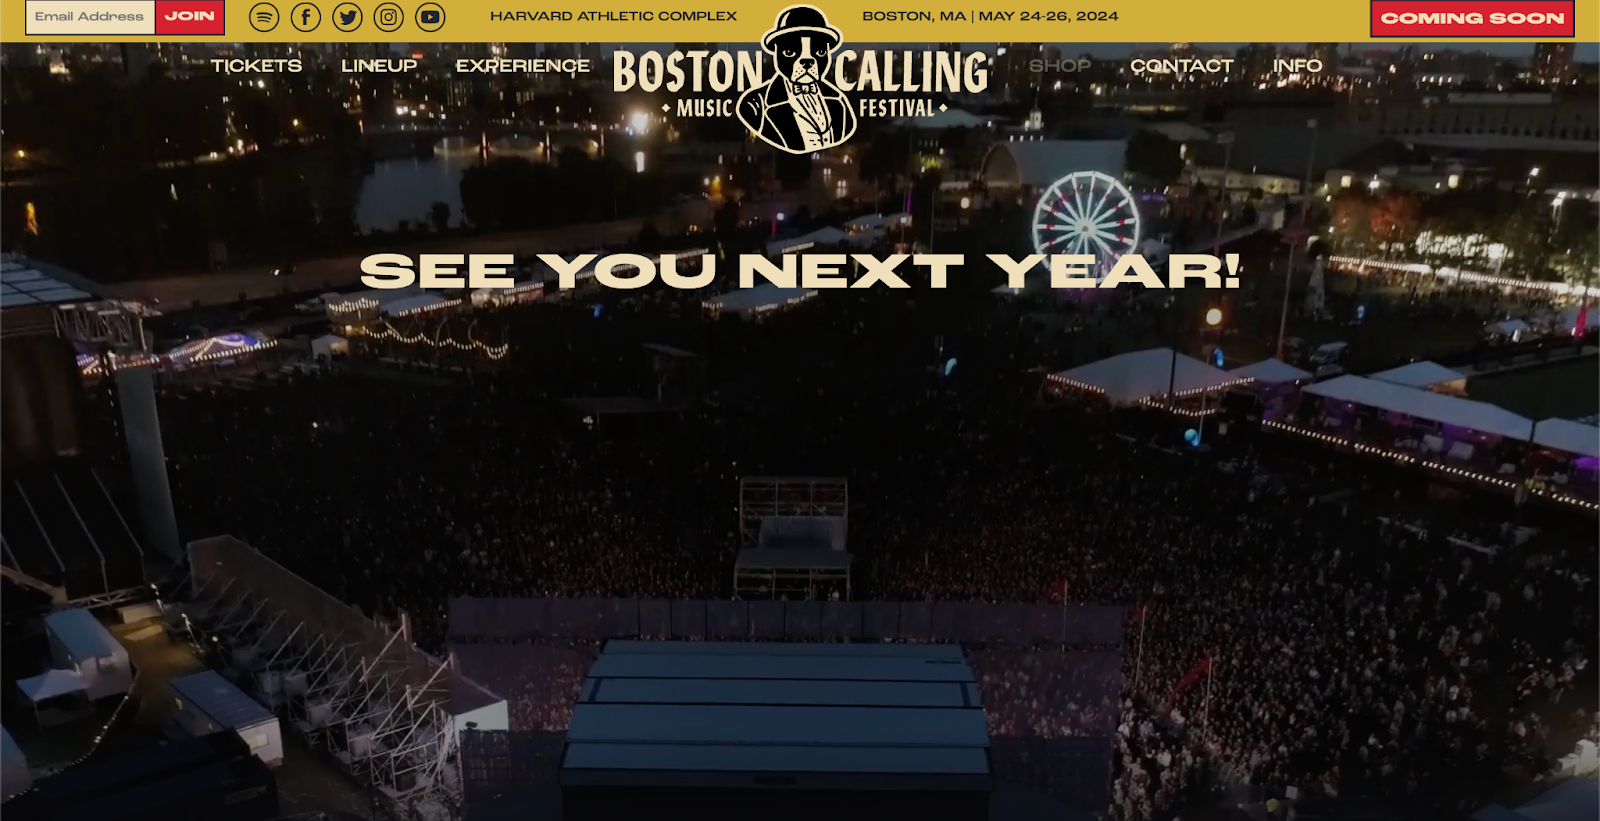 event website examples, boston calling